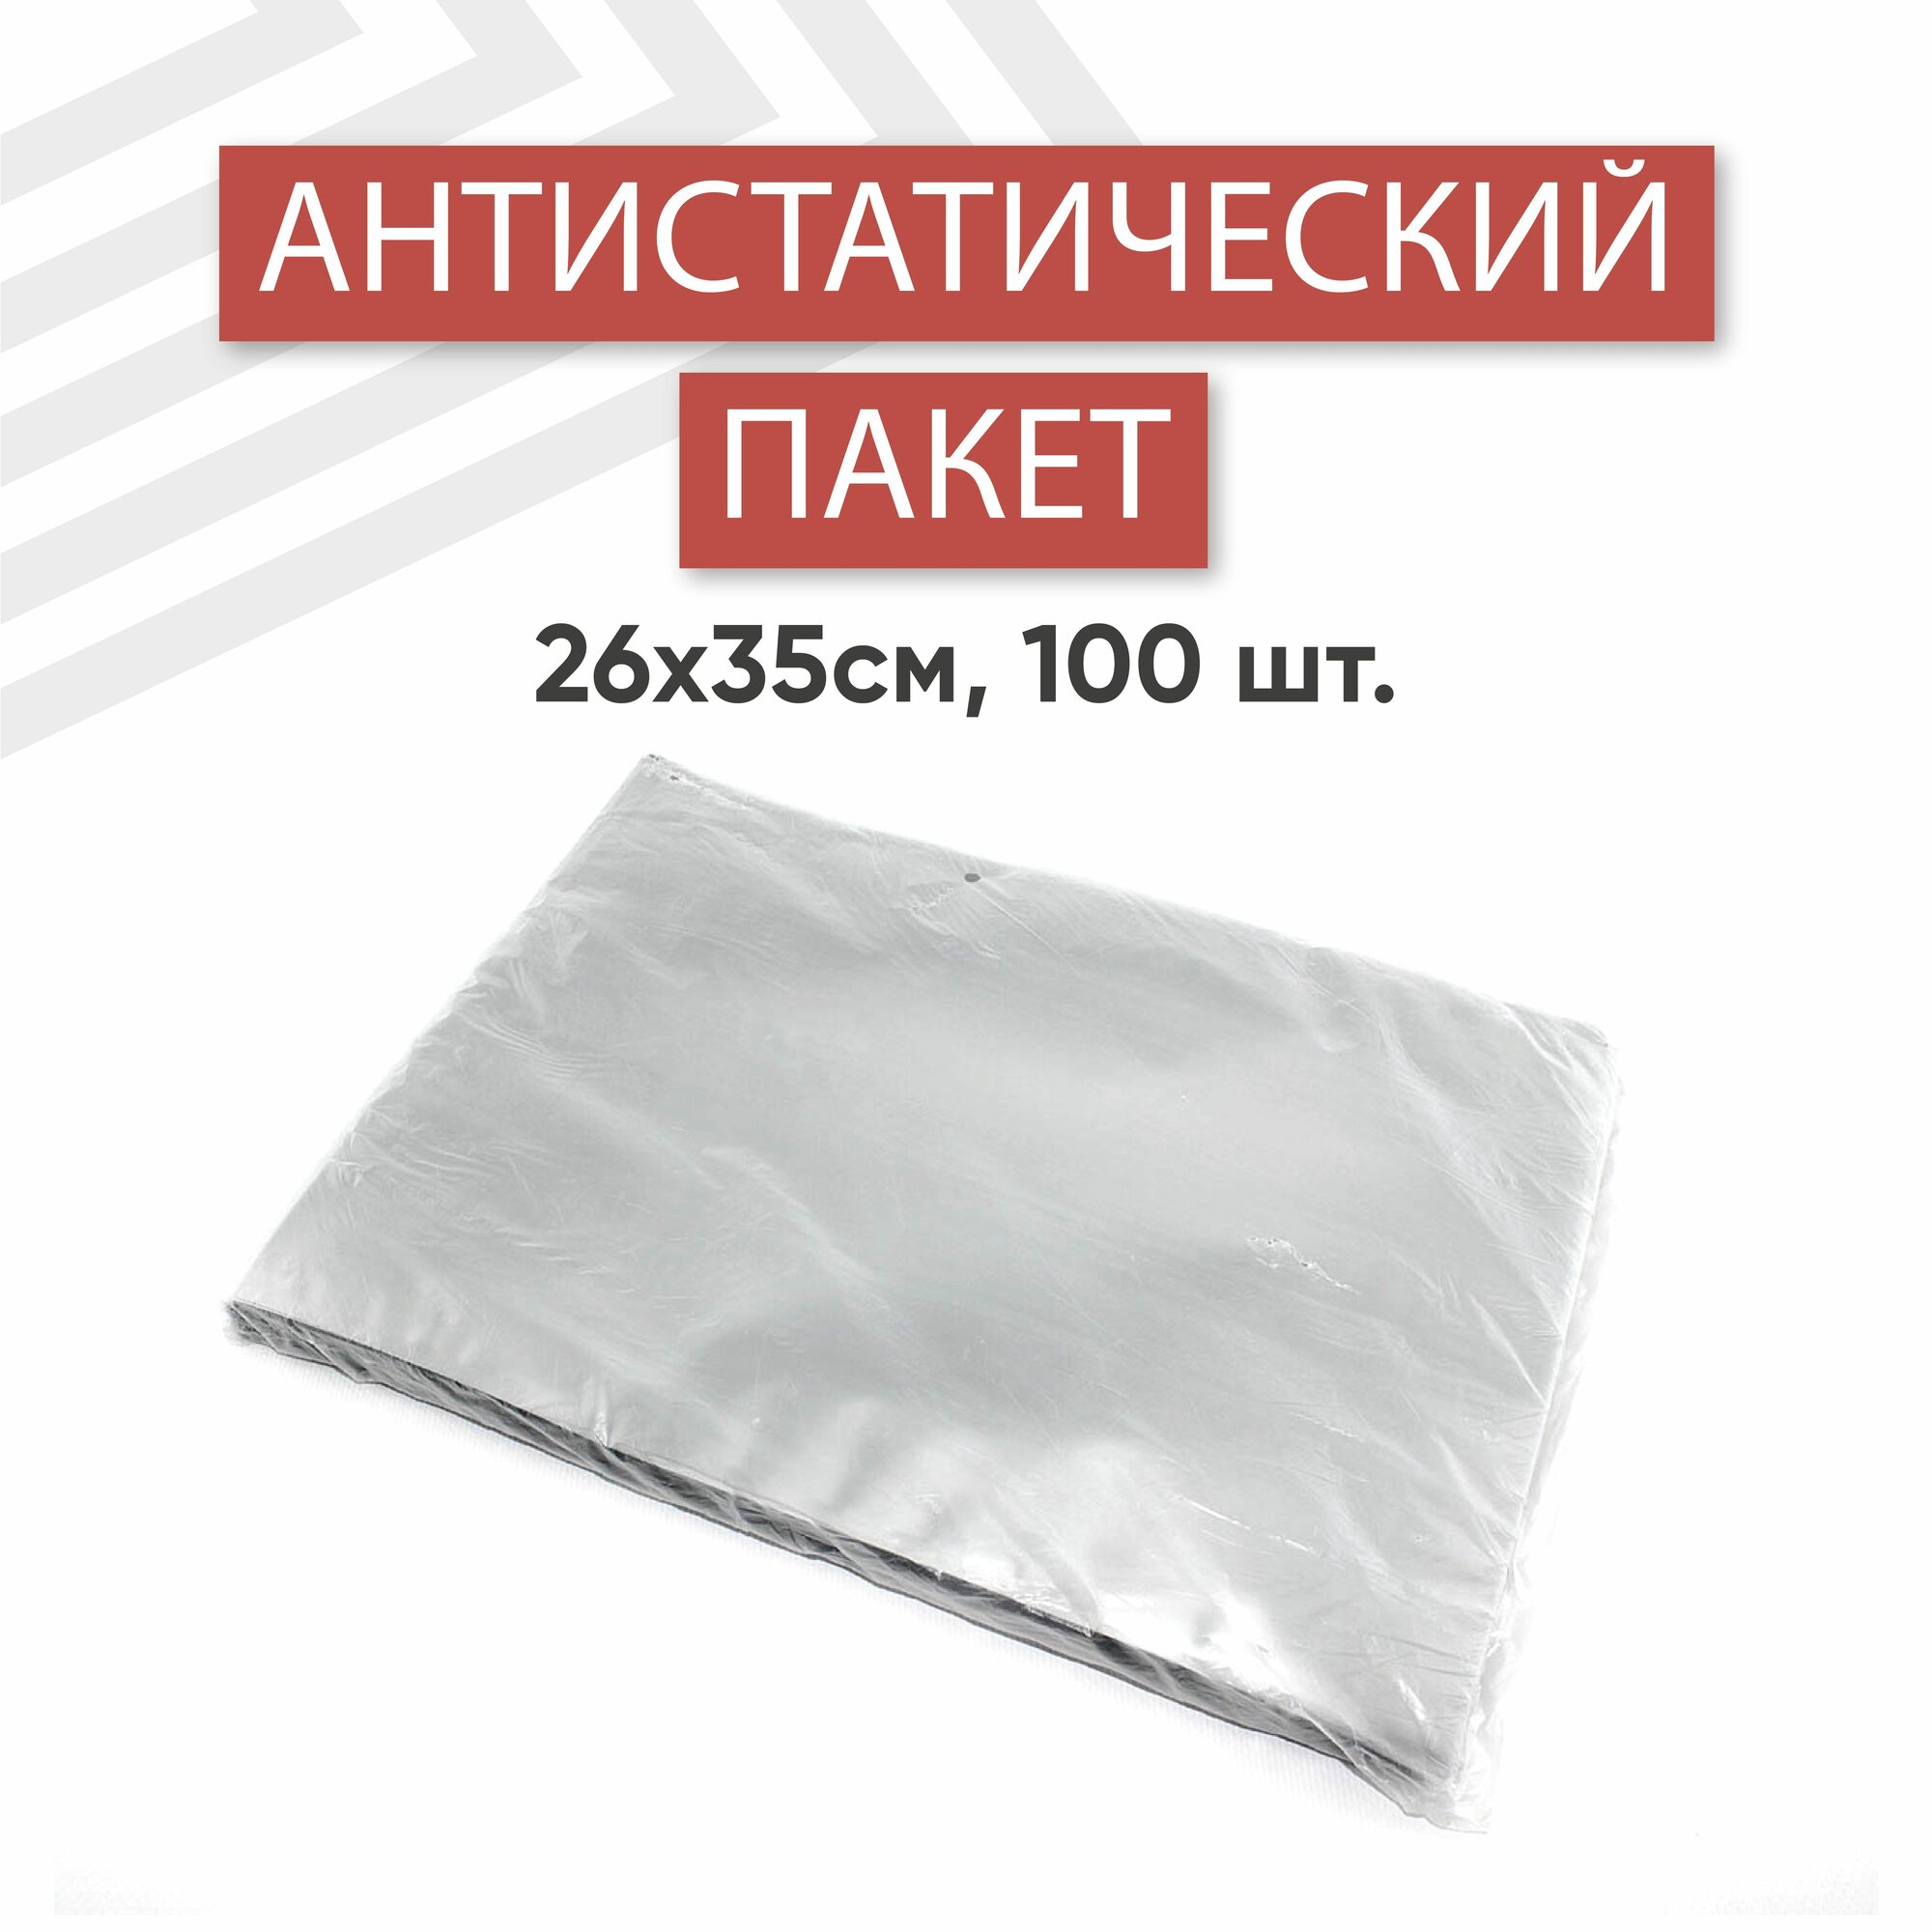 Пакет антистатический, 26x35см, 100 шт